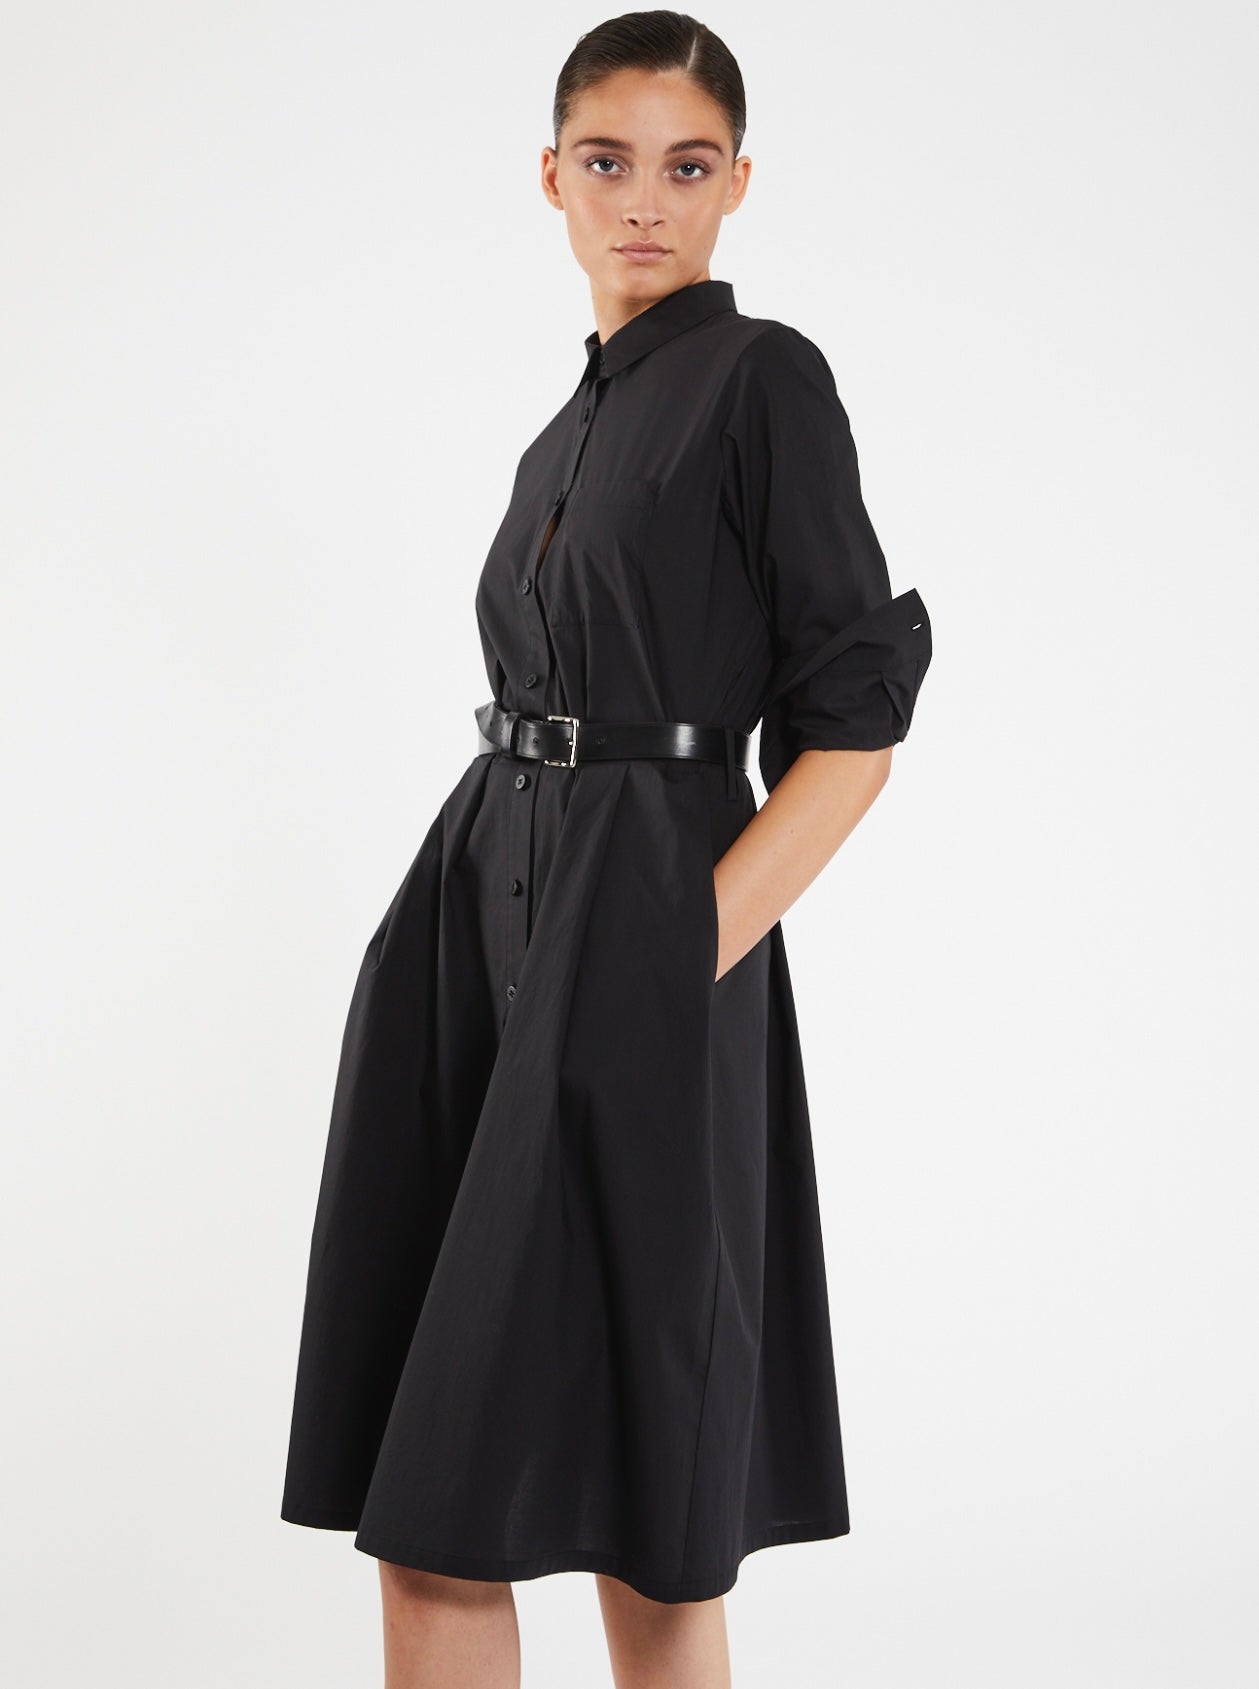 Lis Lareida - Yelena Dress in Black Cotton